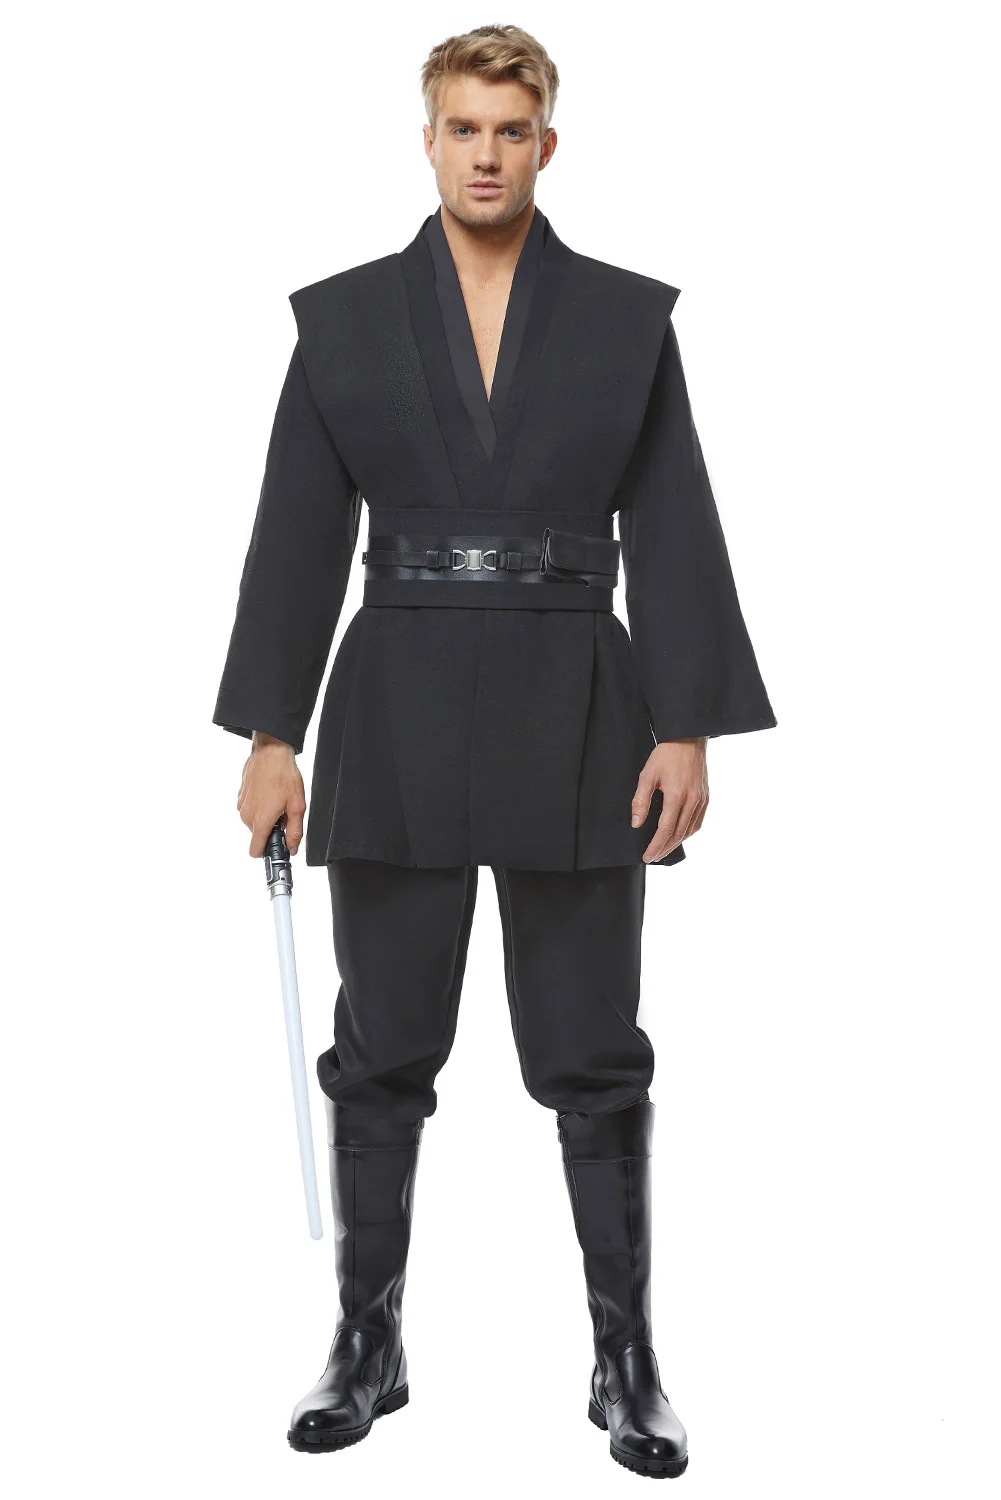 Star Wars Cosplay Anakin Skywalker Jedi Knight Costume Halloween Uniform Outfit 